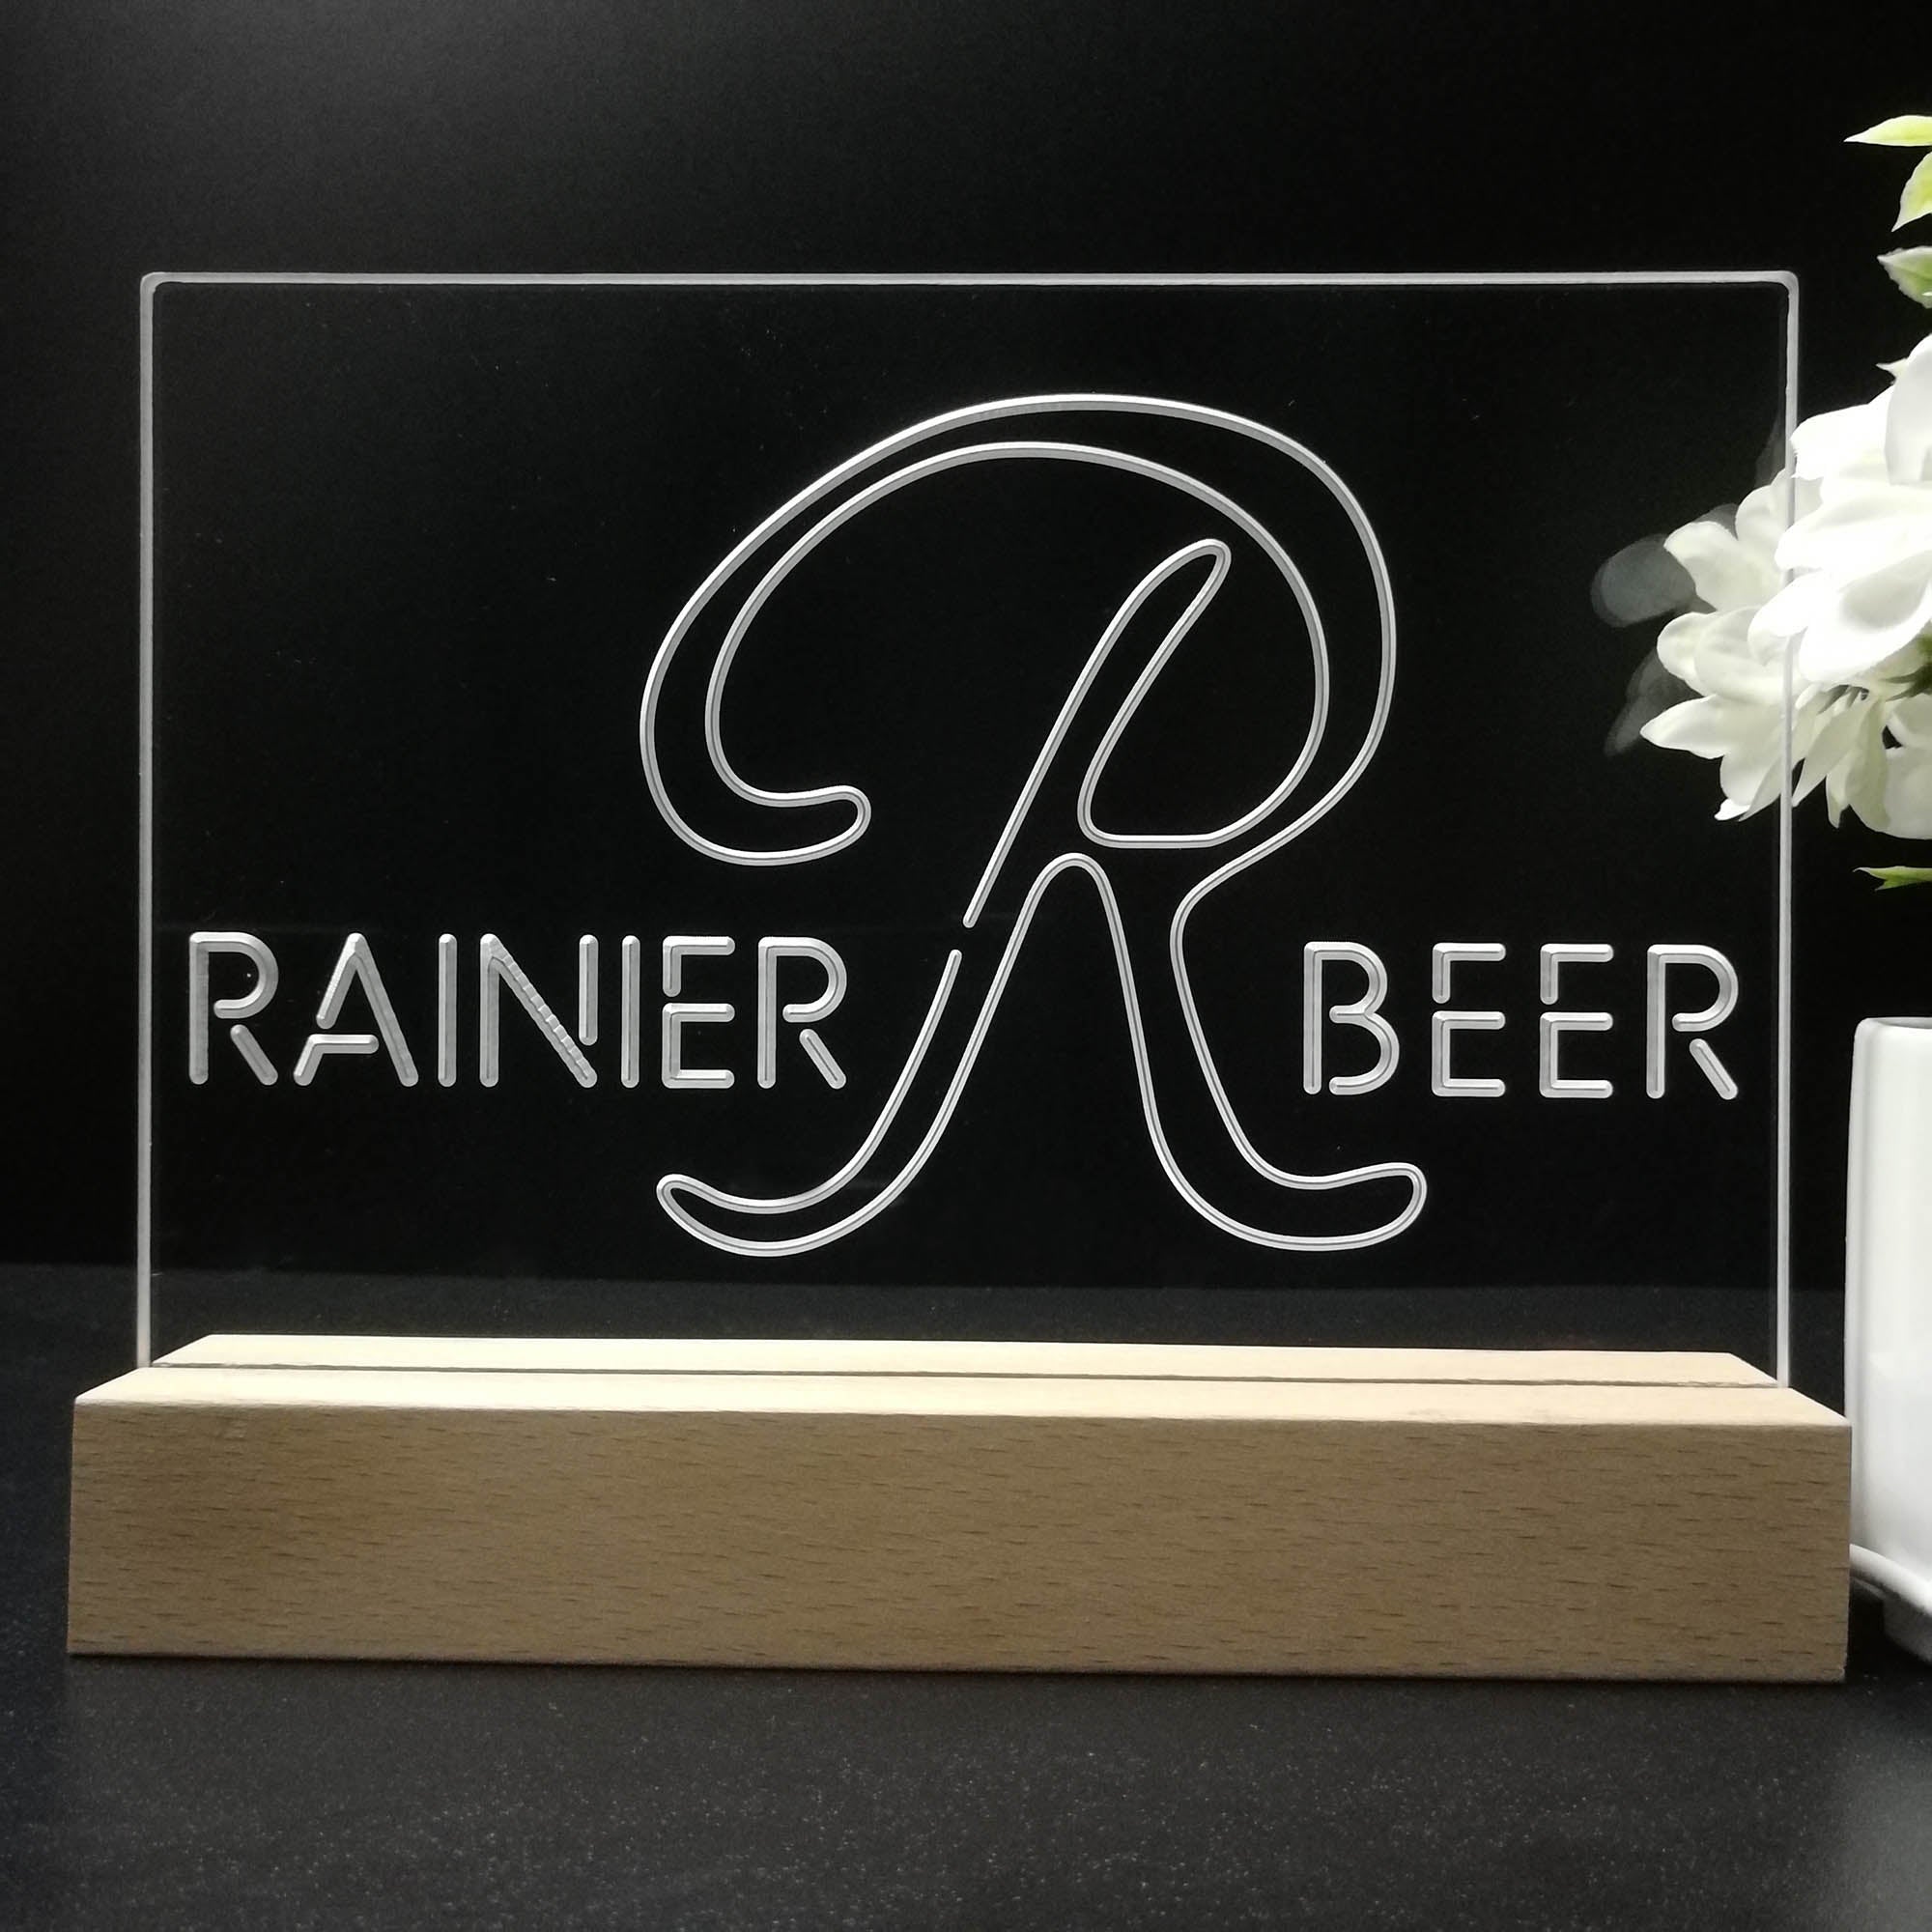 Rainier Beer Night Light LED Sign